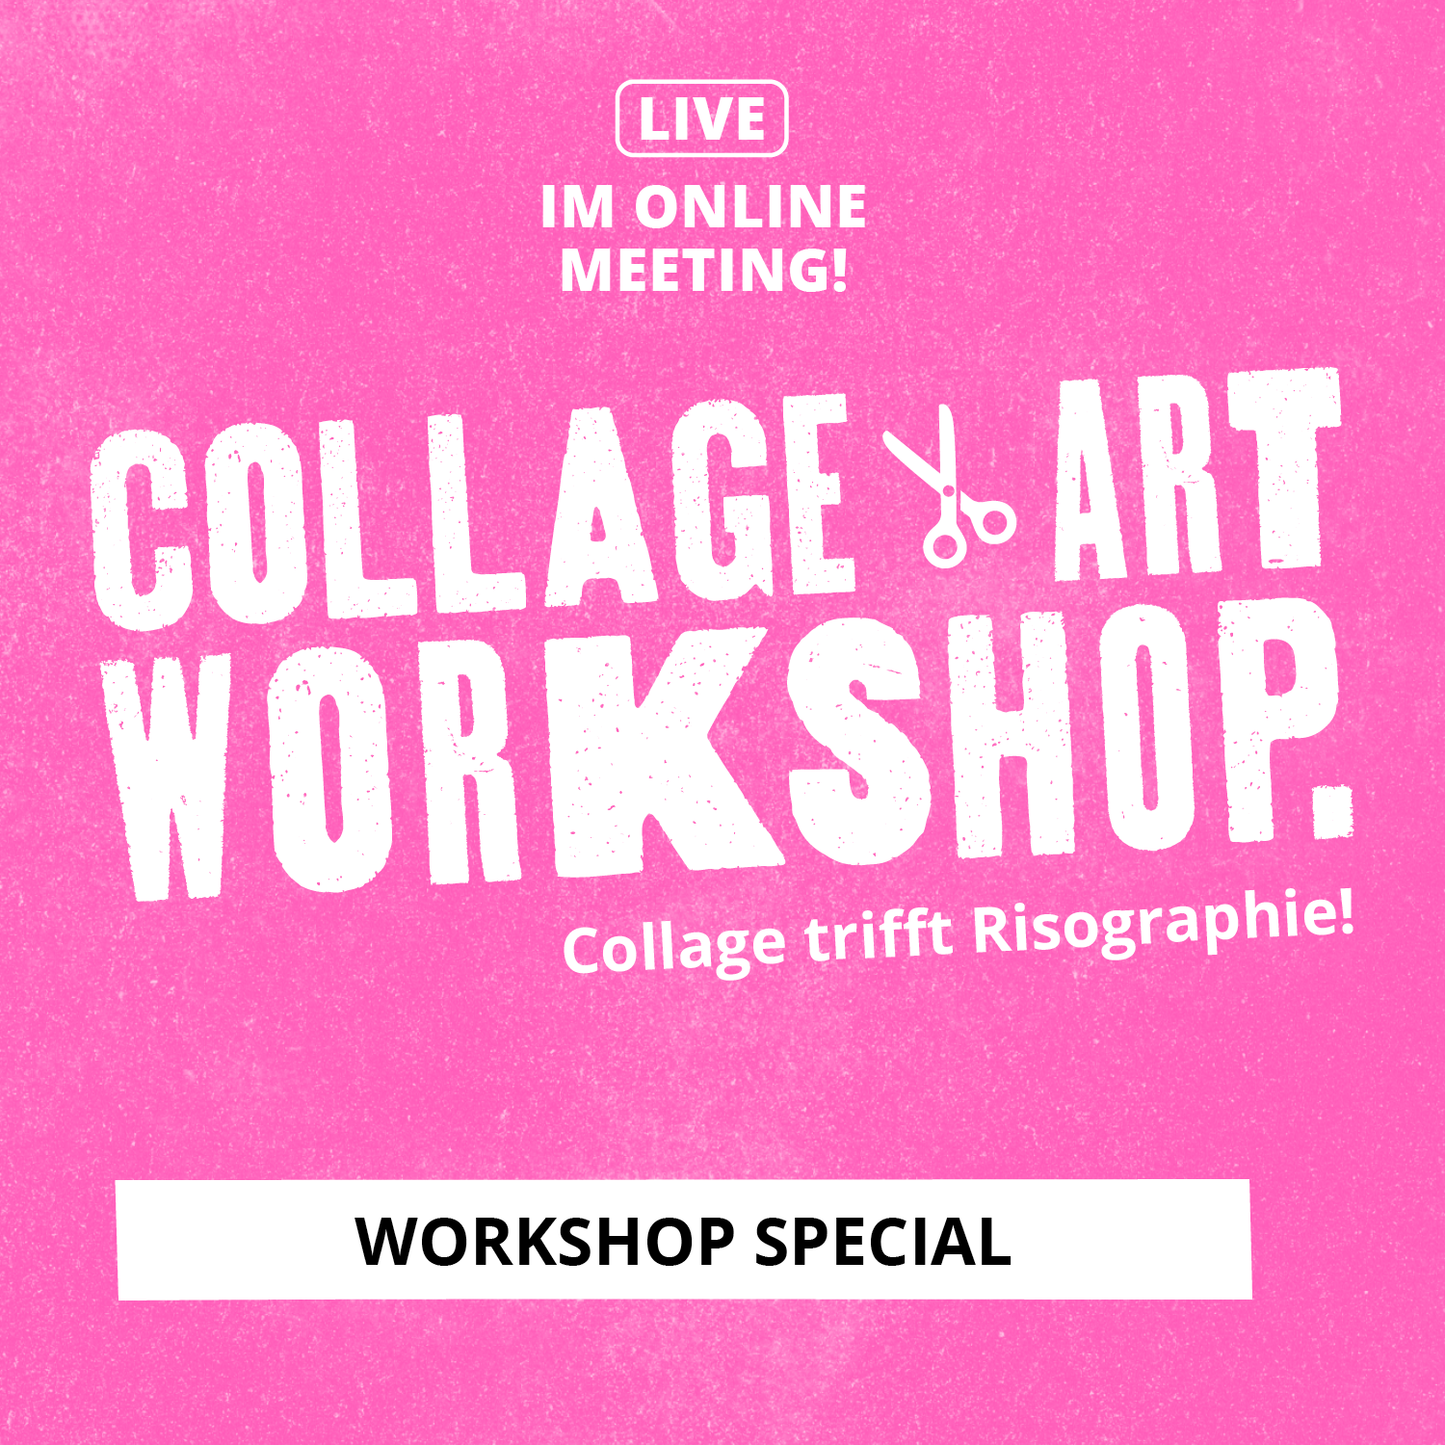 Collage Art Workshop